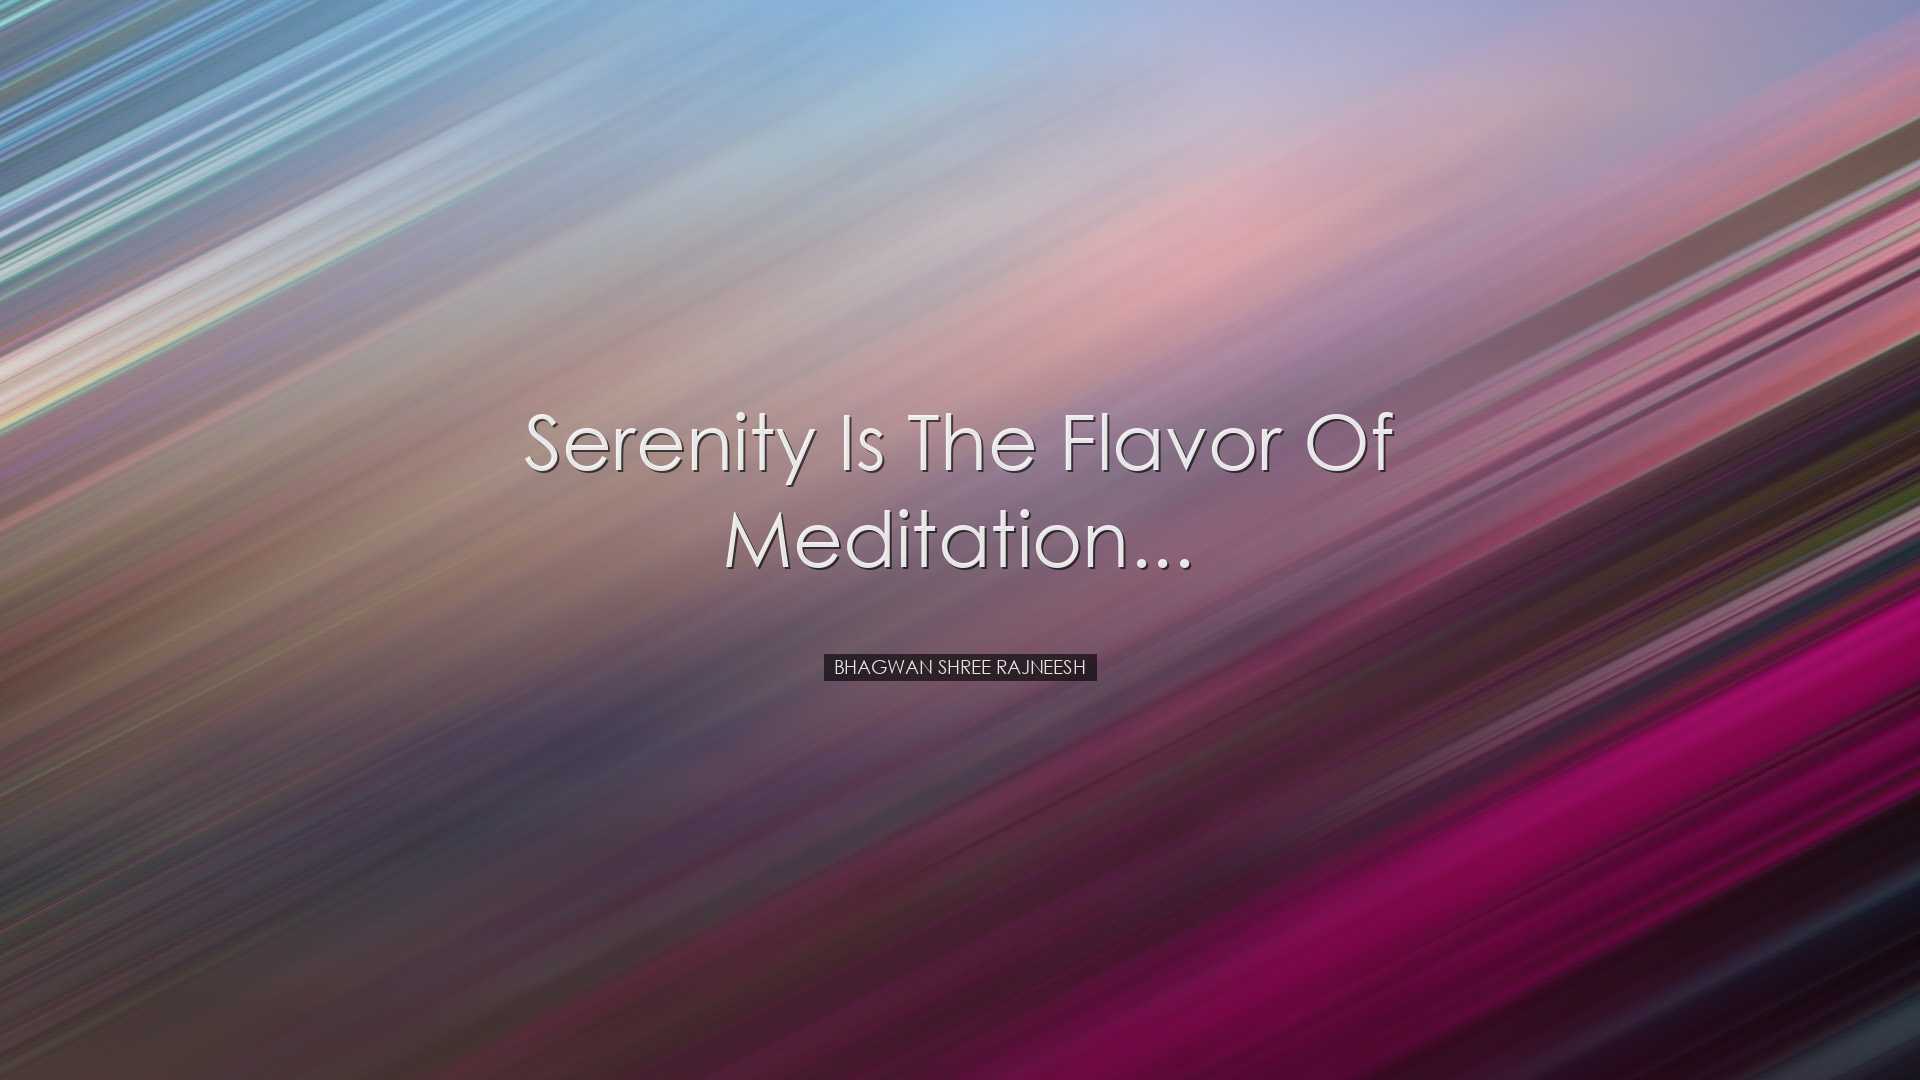 Serenity is the flavor of meditation... - Bhagwan Shree Rajneesh